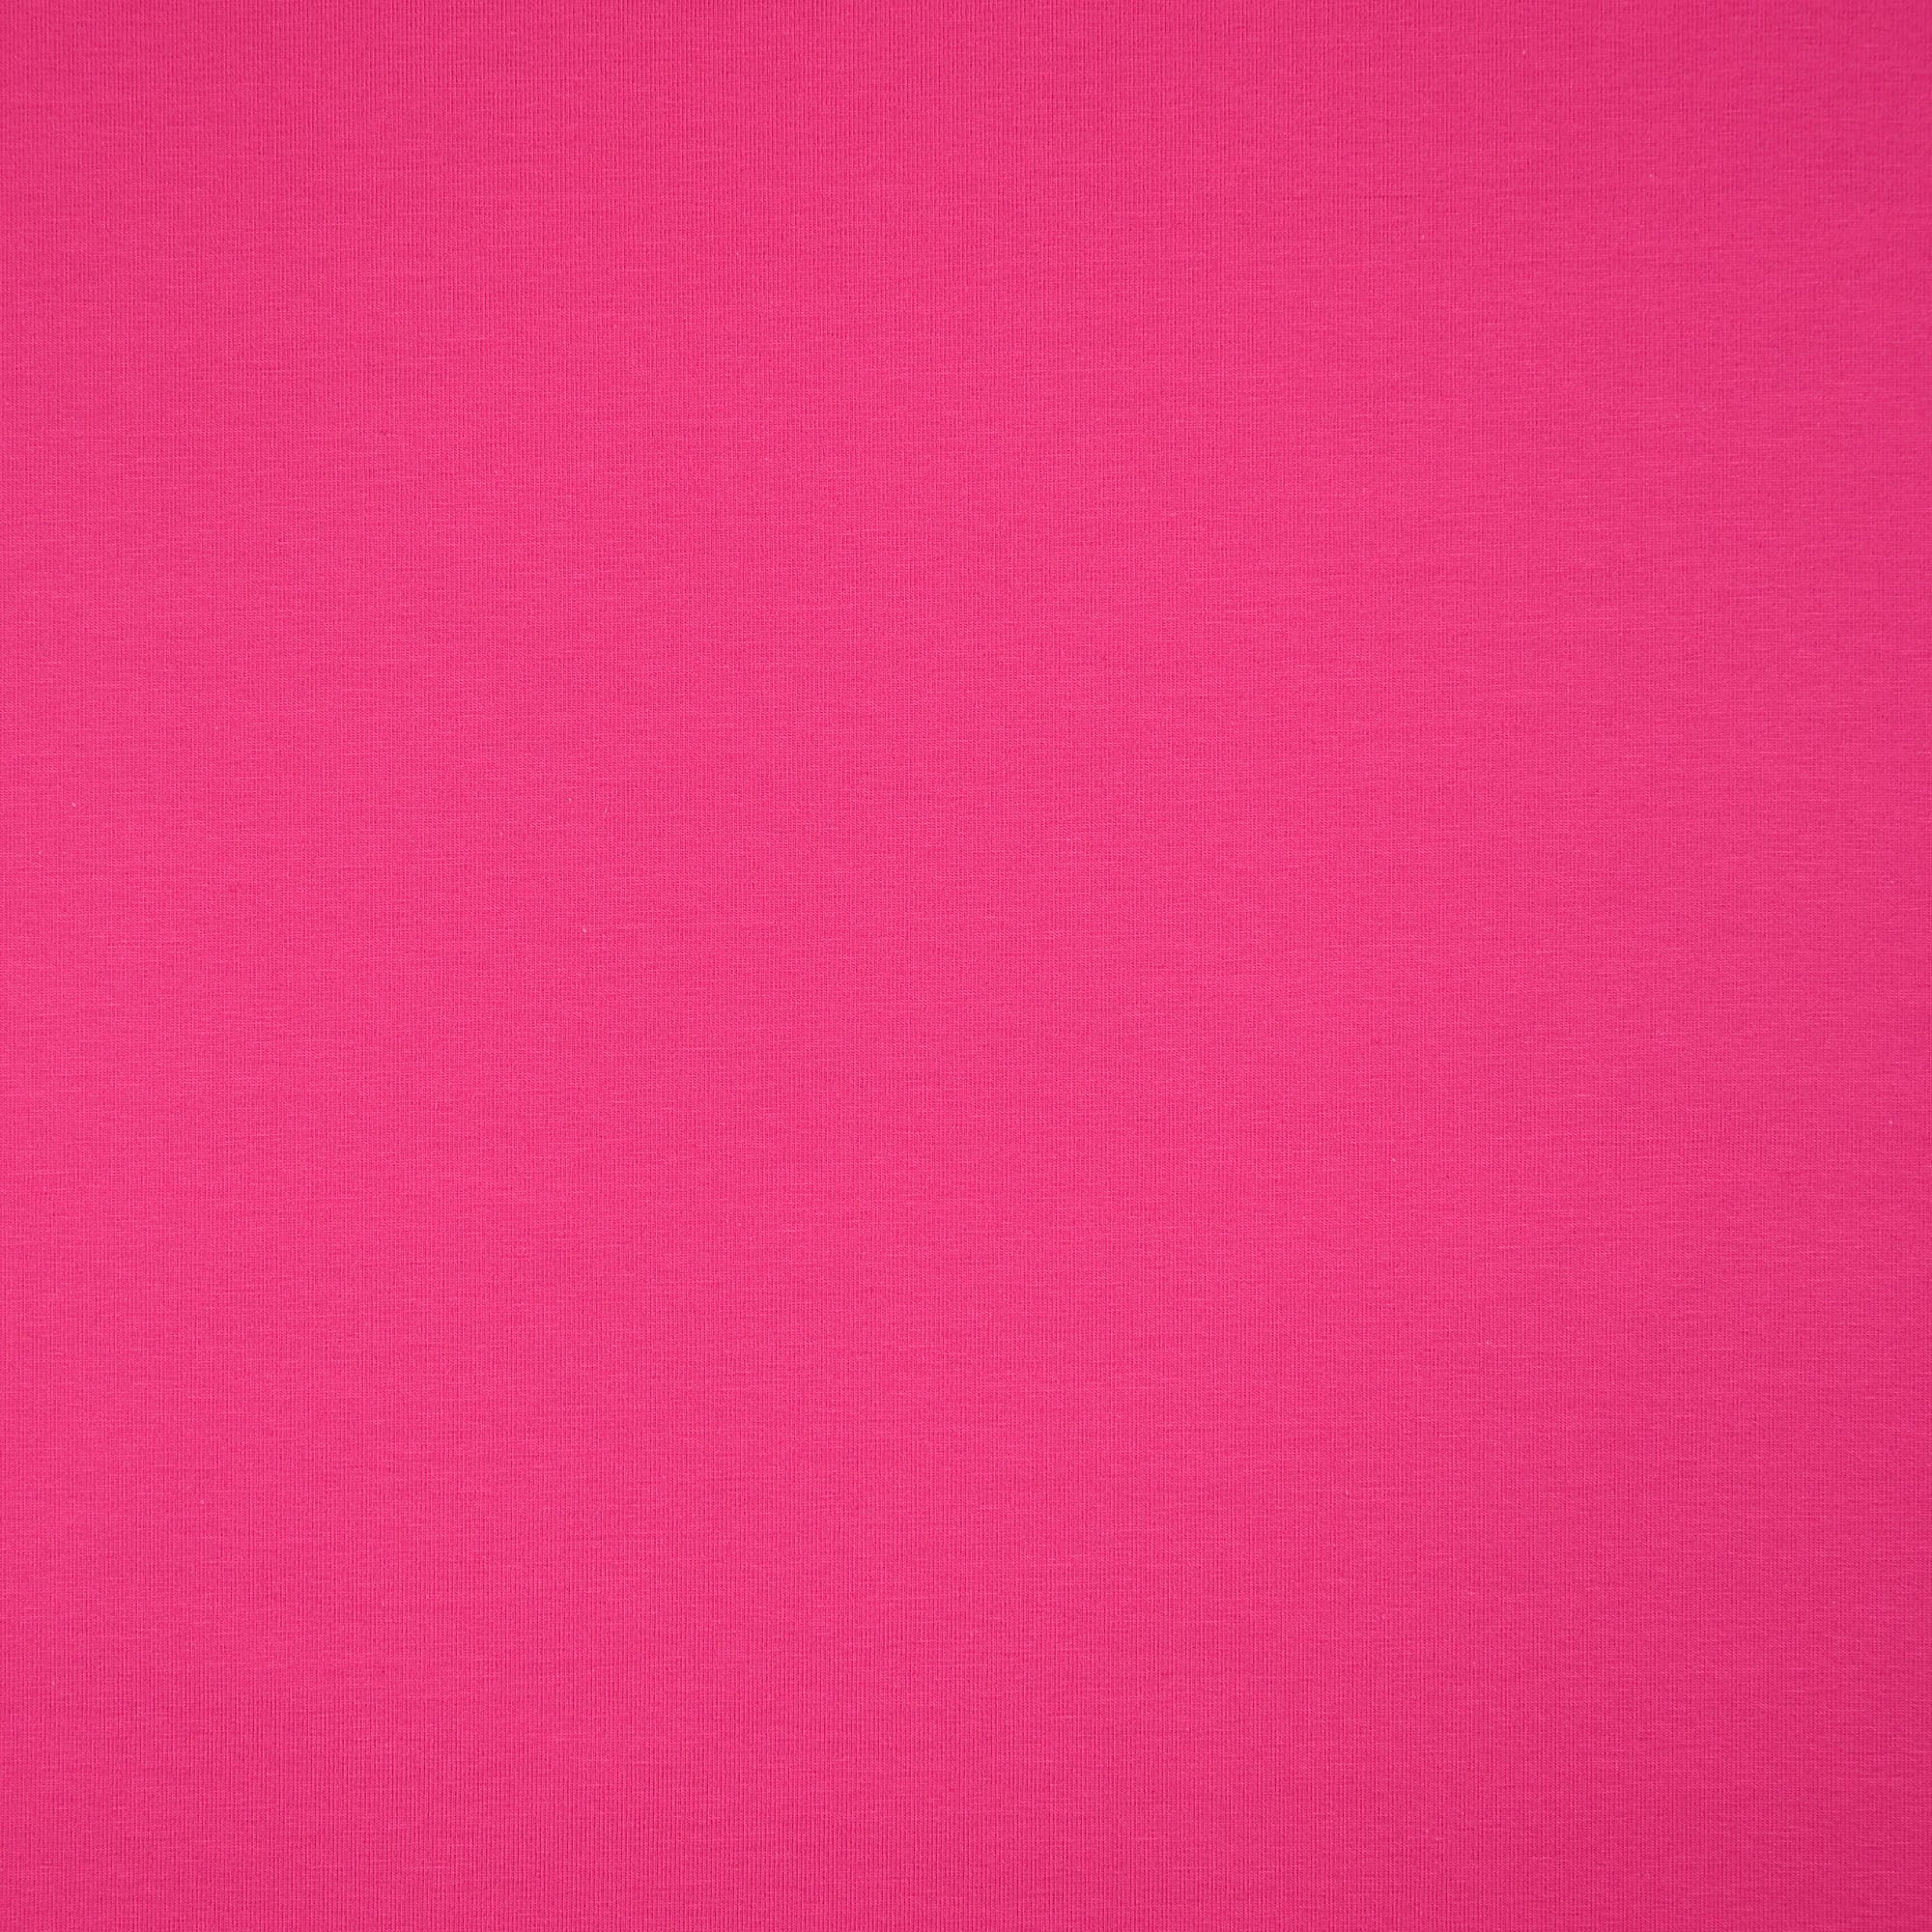 Essential Chic Fuchsia Pink  Plain Cotton Jersey Fabric